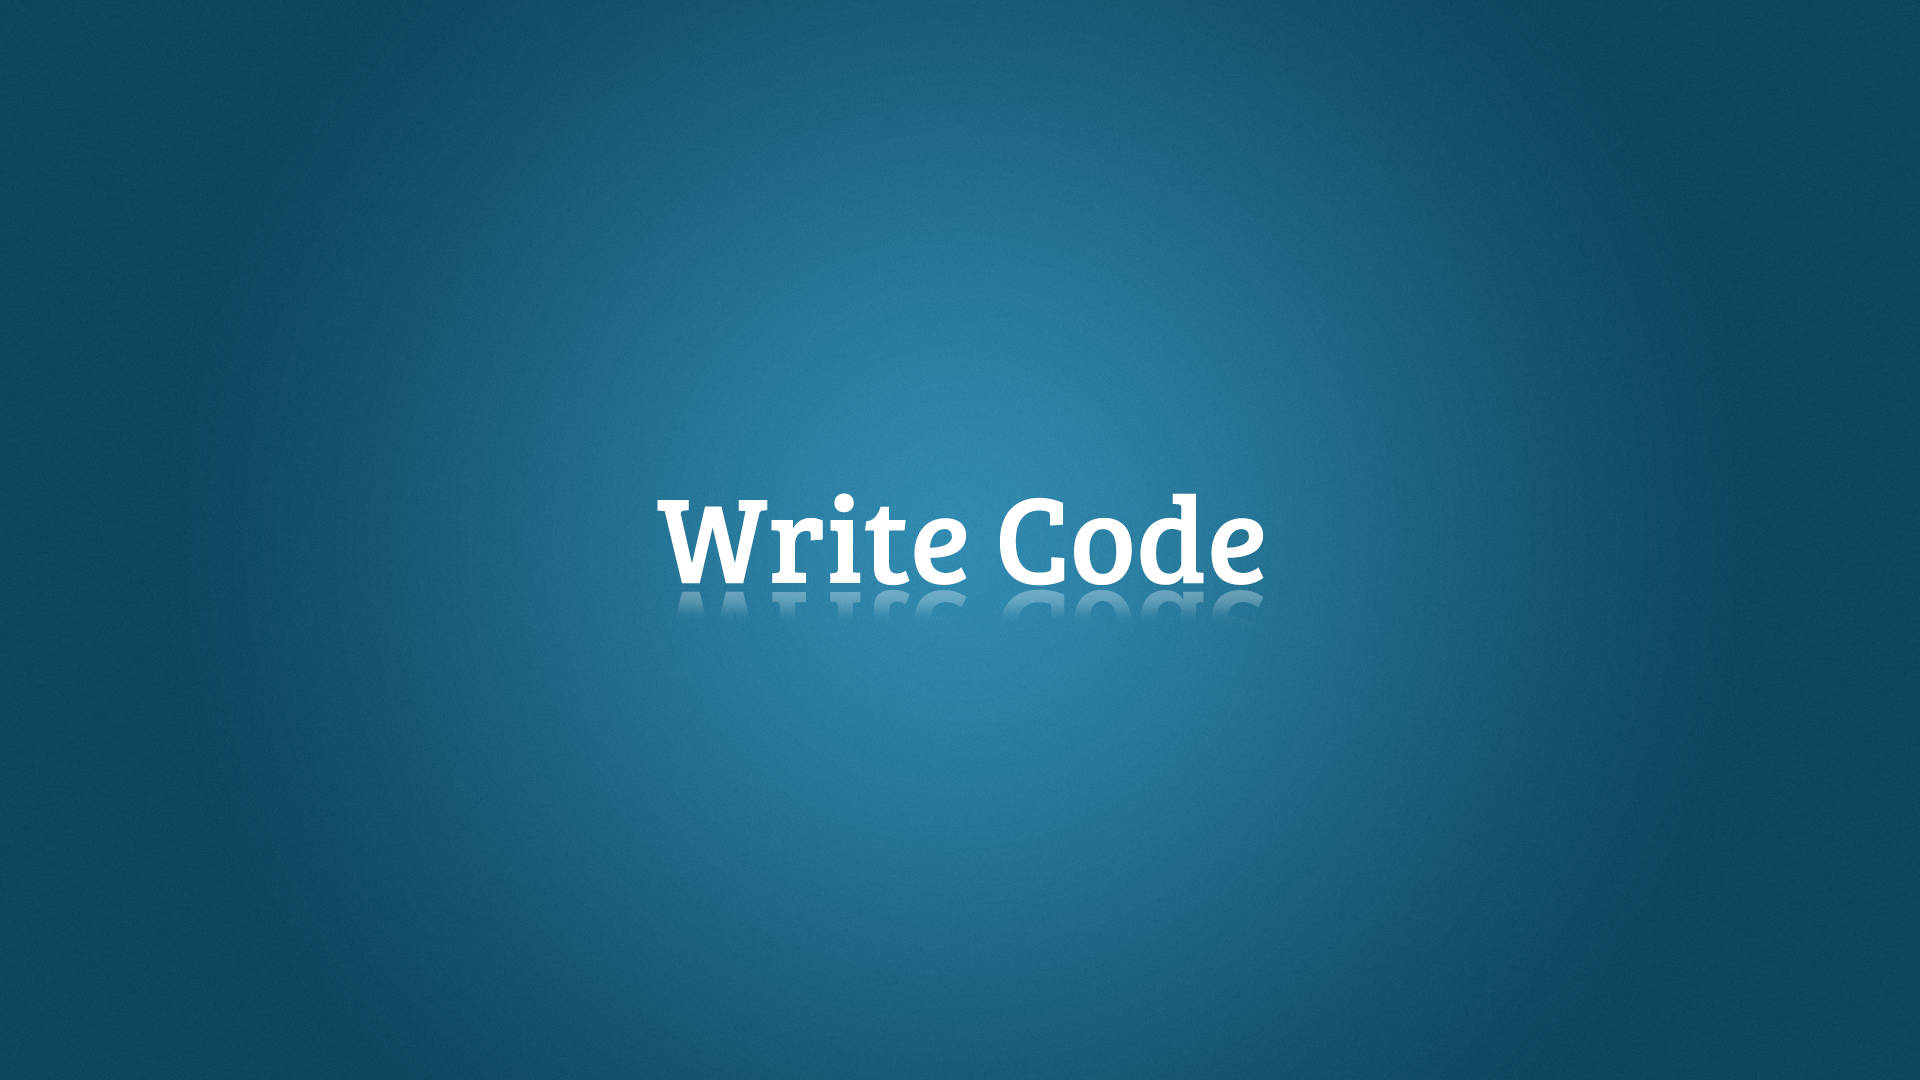 Write Code Coding Wallpaper